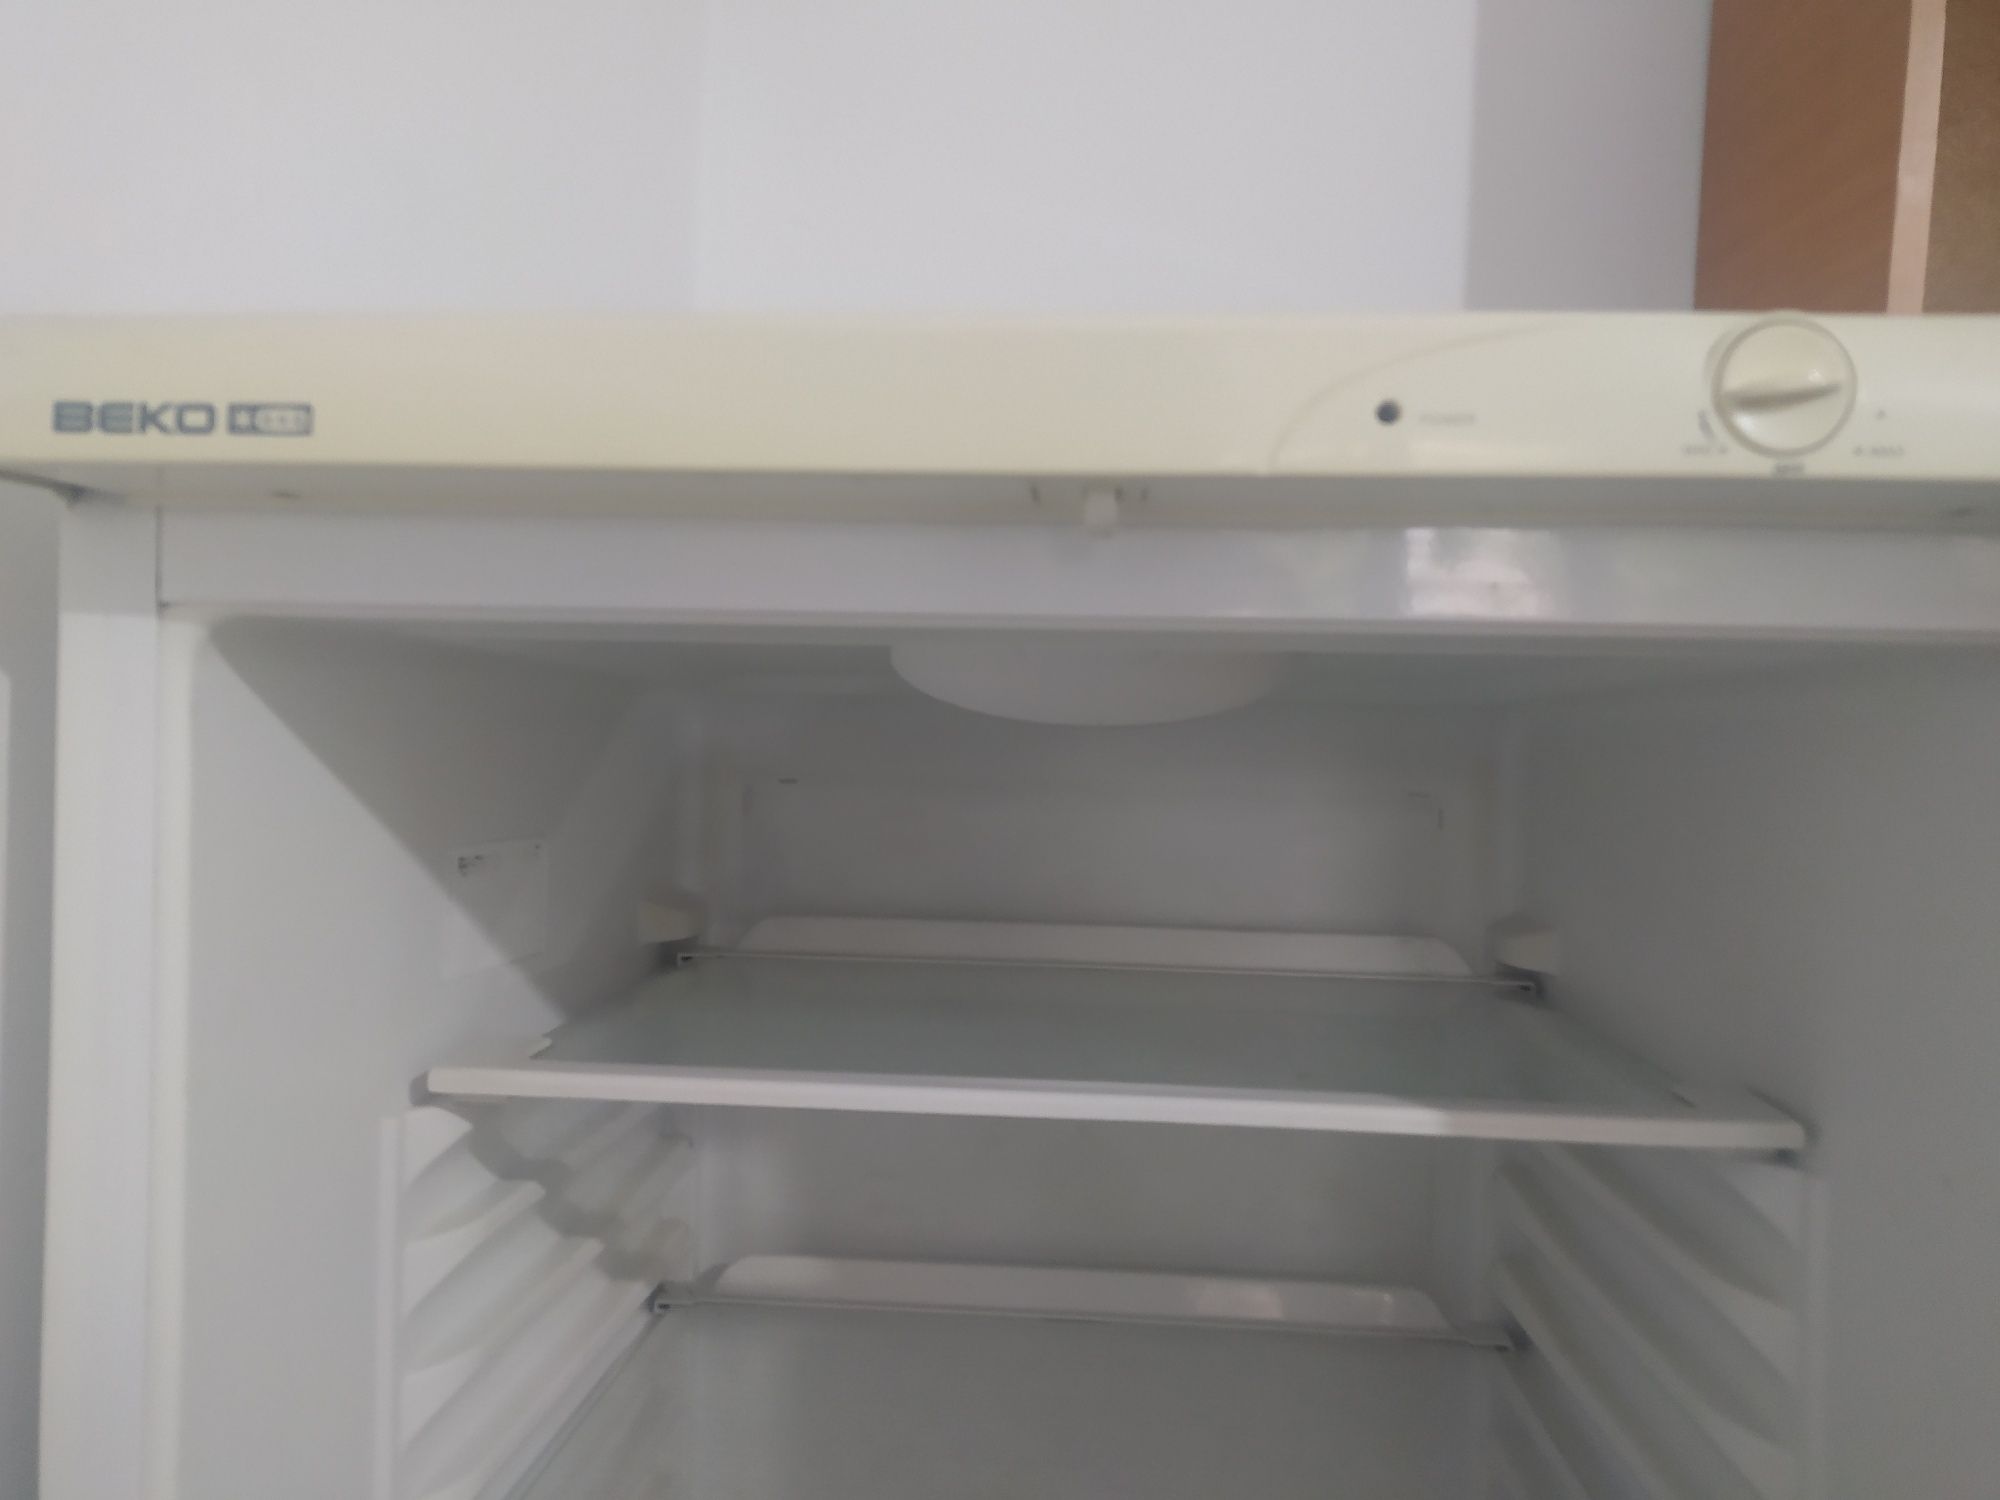 Холодильник б/у не включается